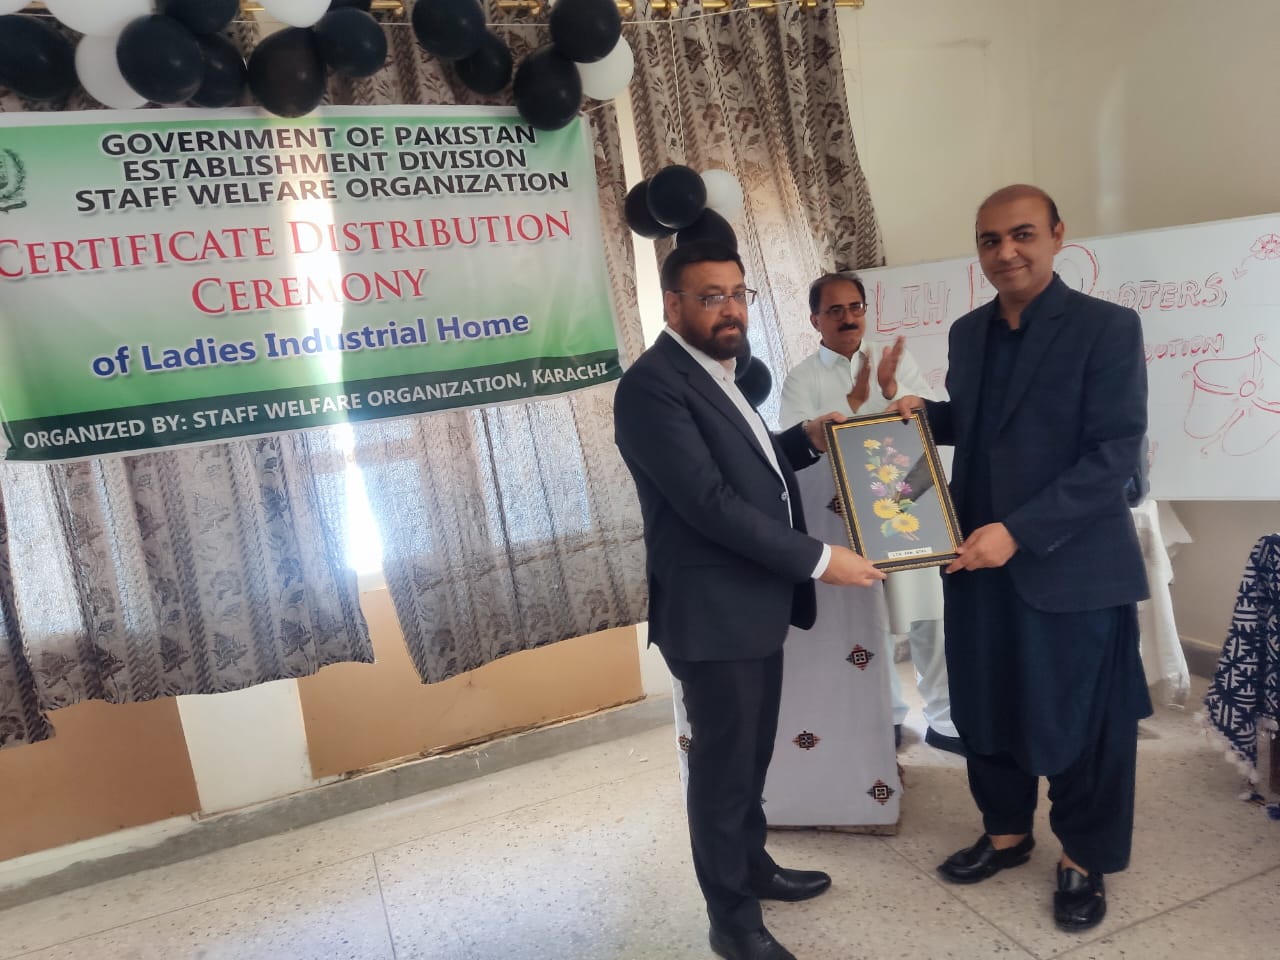 Certificate_Distribution_Ceremony_LIH_Karachi